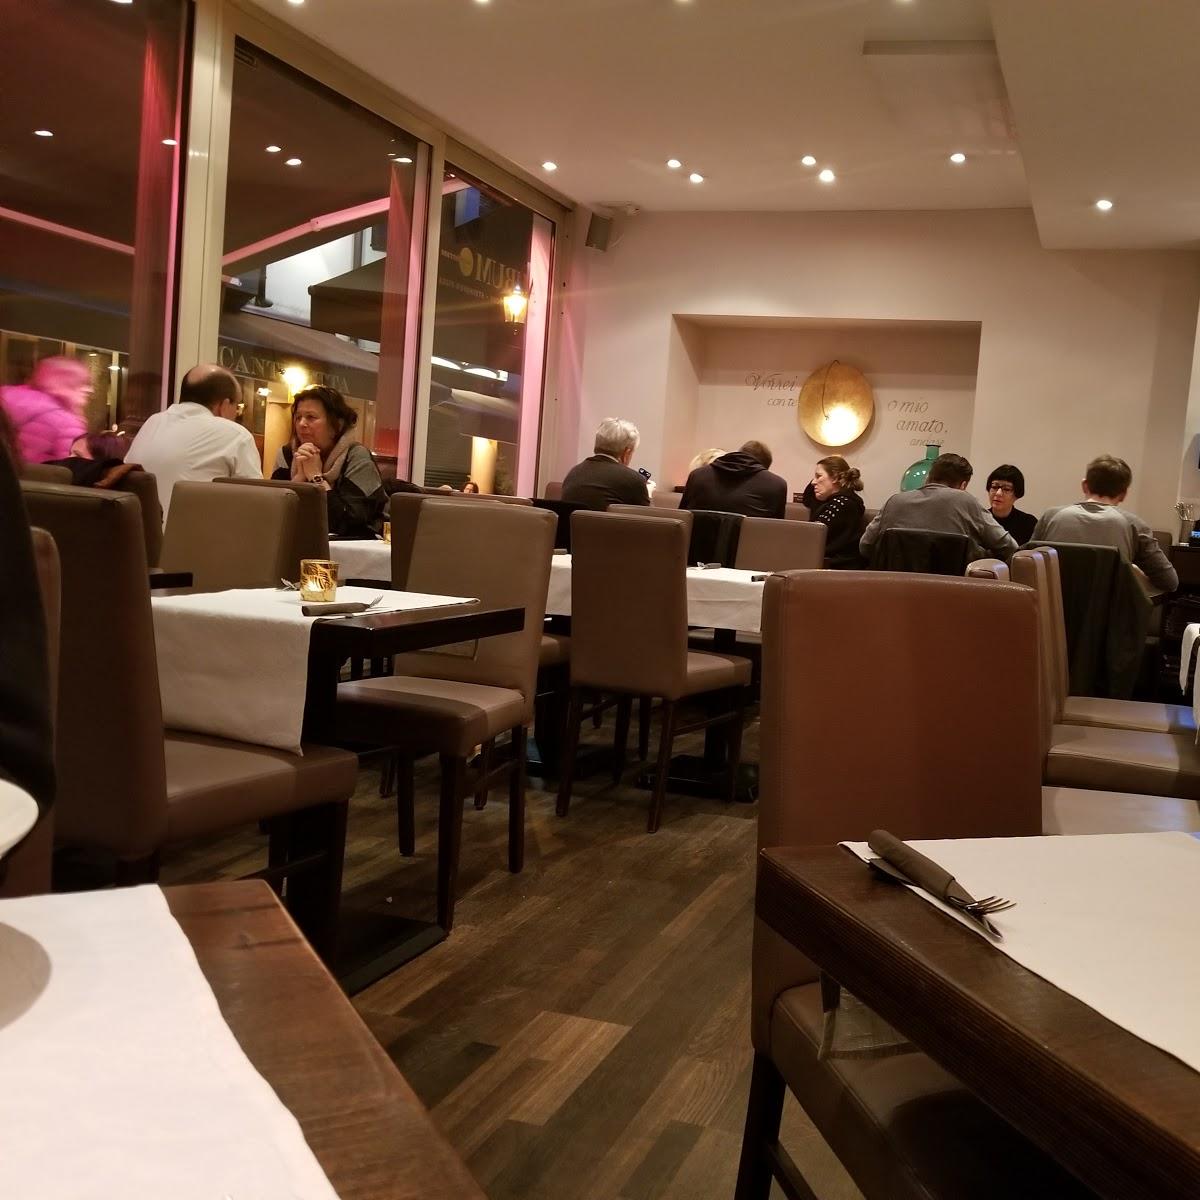 Restaurant "Aurum" in  Wiesbaden